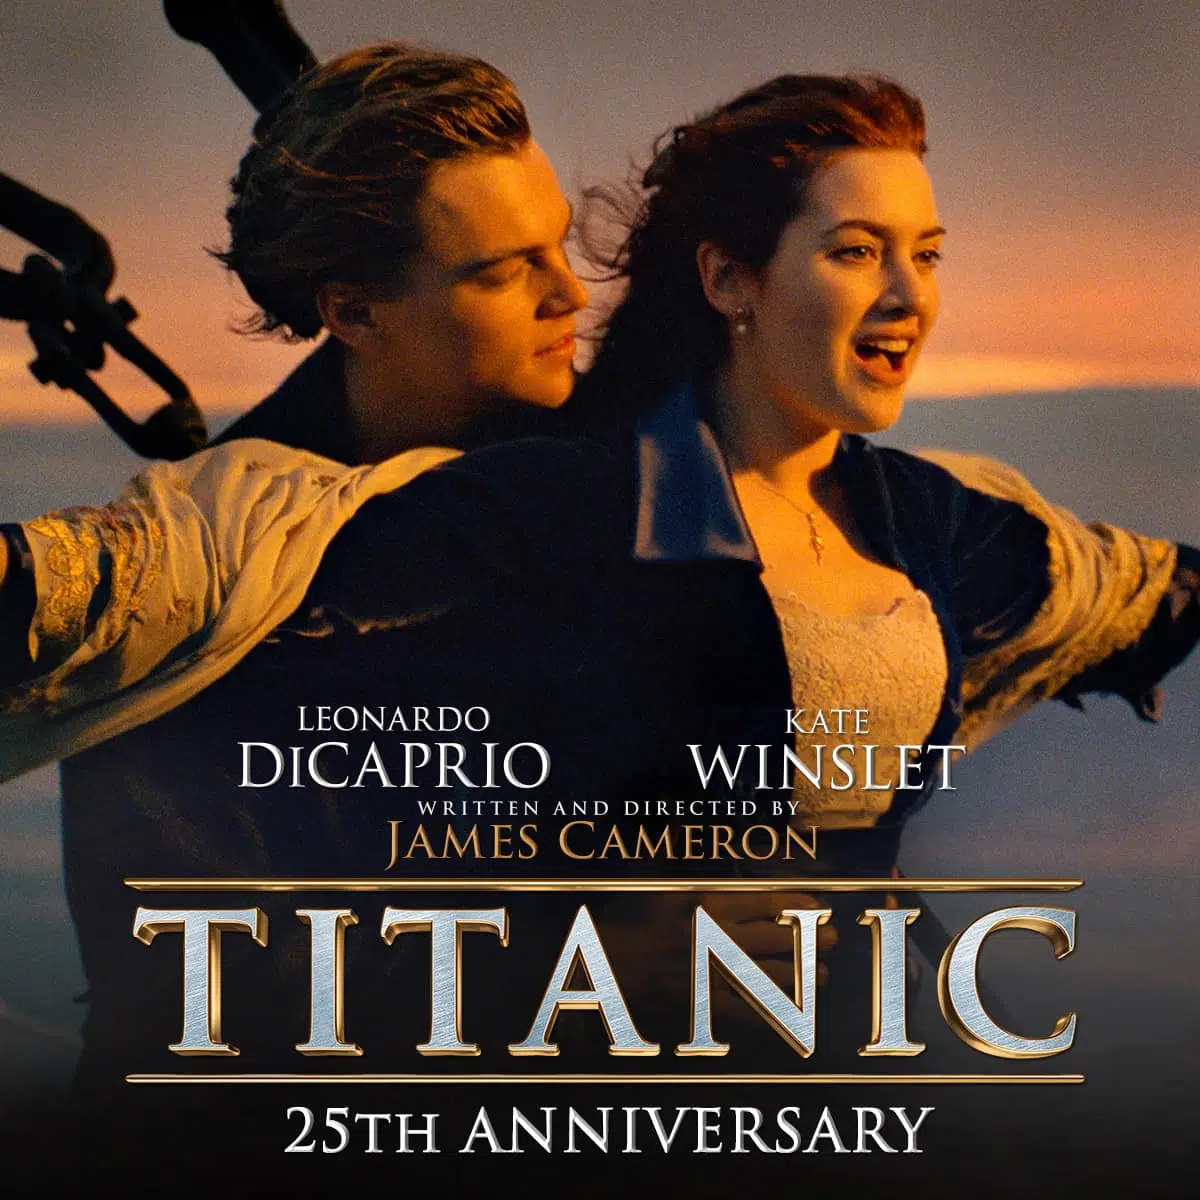 Generation Star Wars: Titanic returns to the big screen in 4K 3D